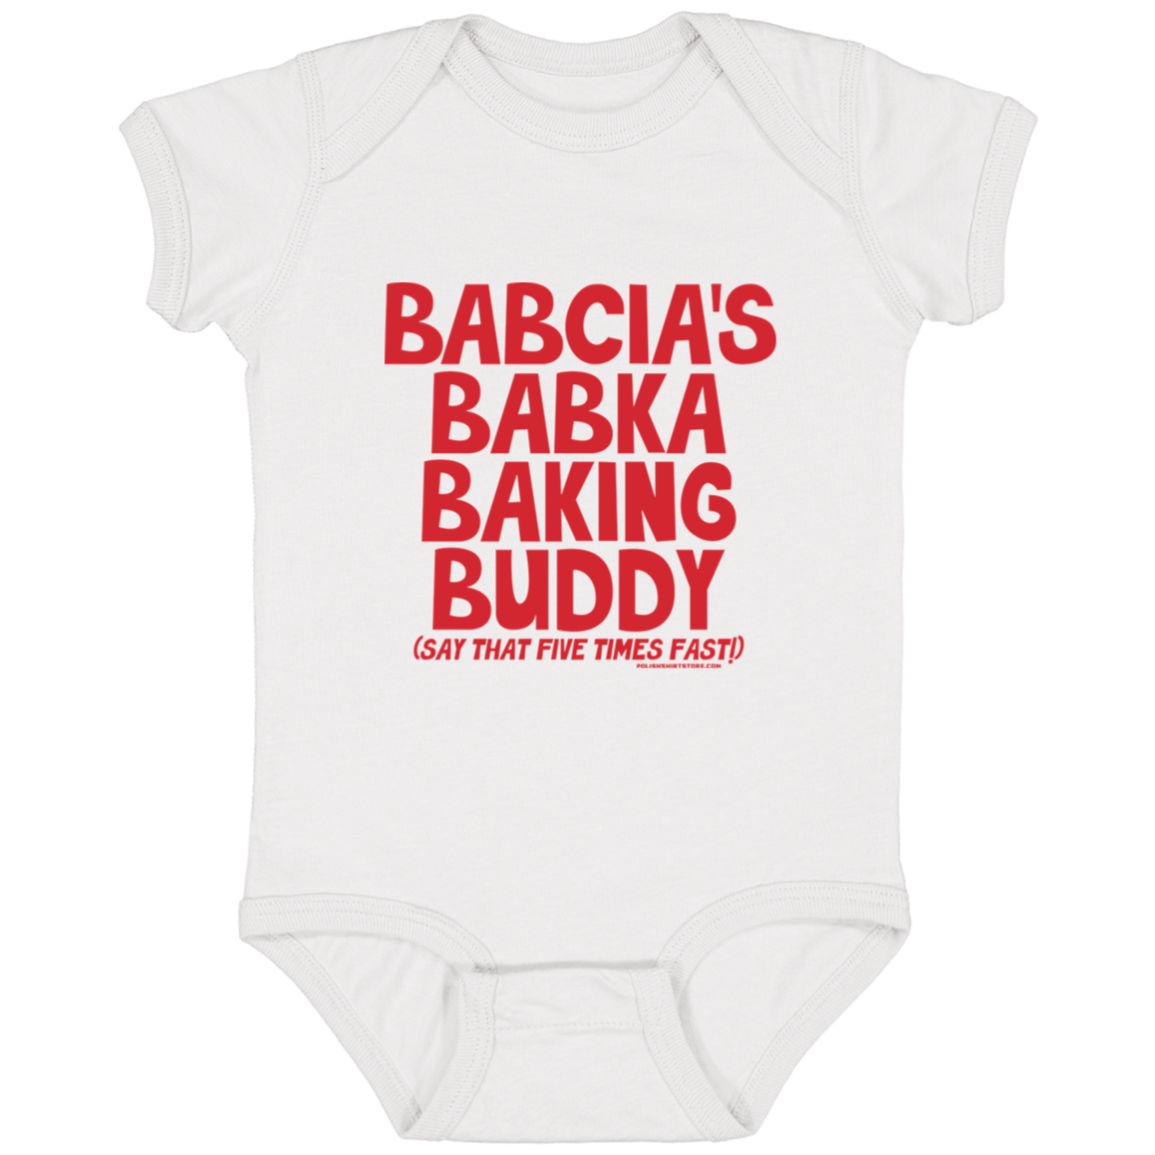 Babcia's Babka Baking Buddy Infant Bodysuit Baby CustomCat White Newborn 